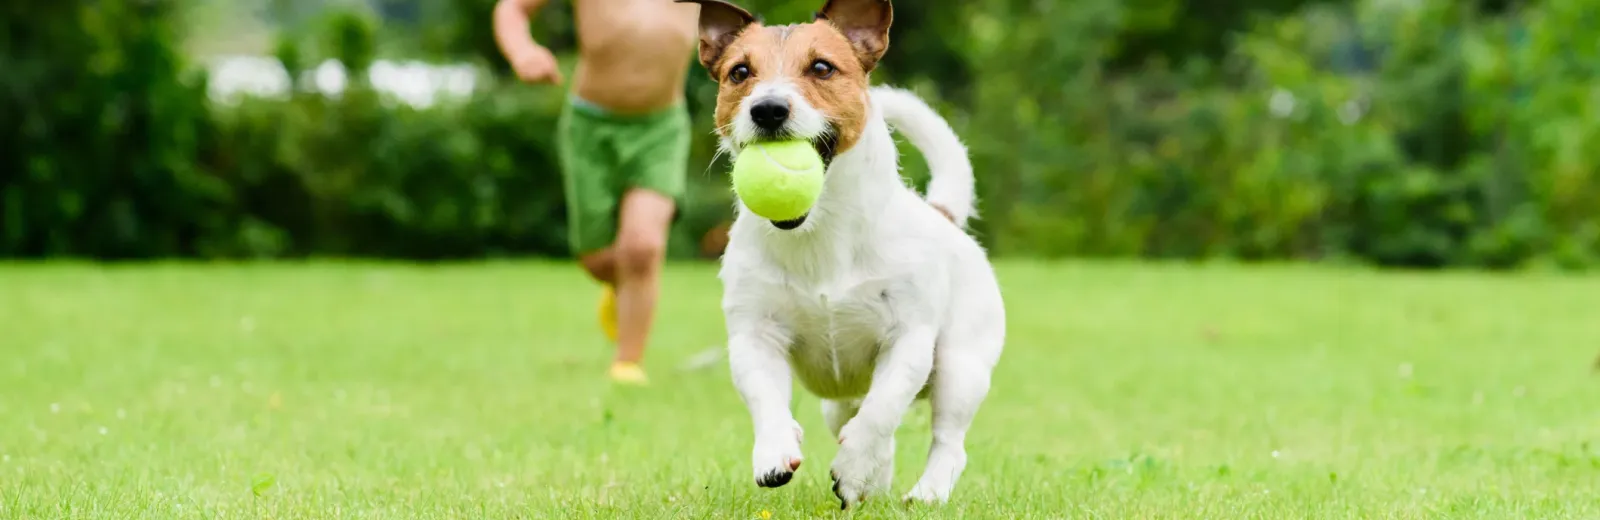 Boy chasing dog with ball in yard